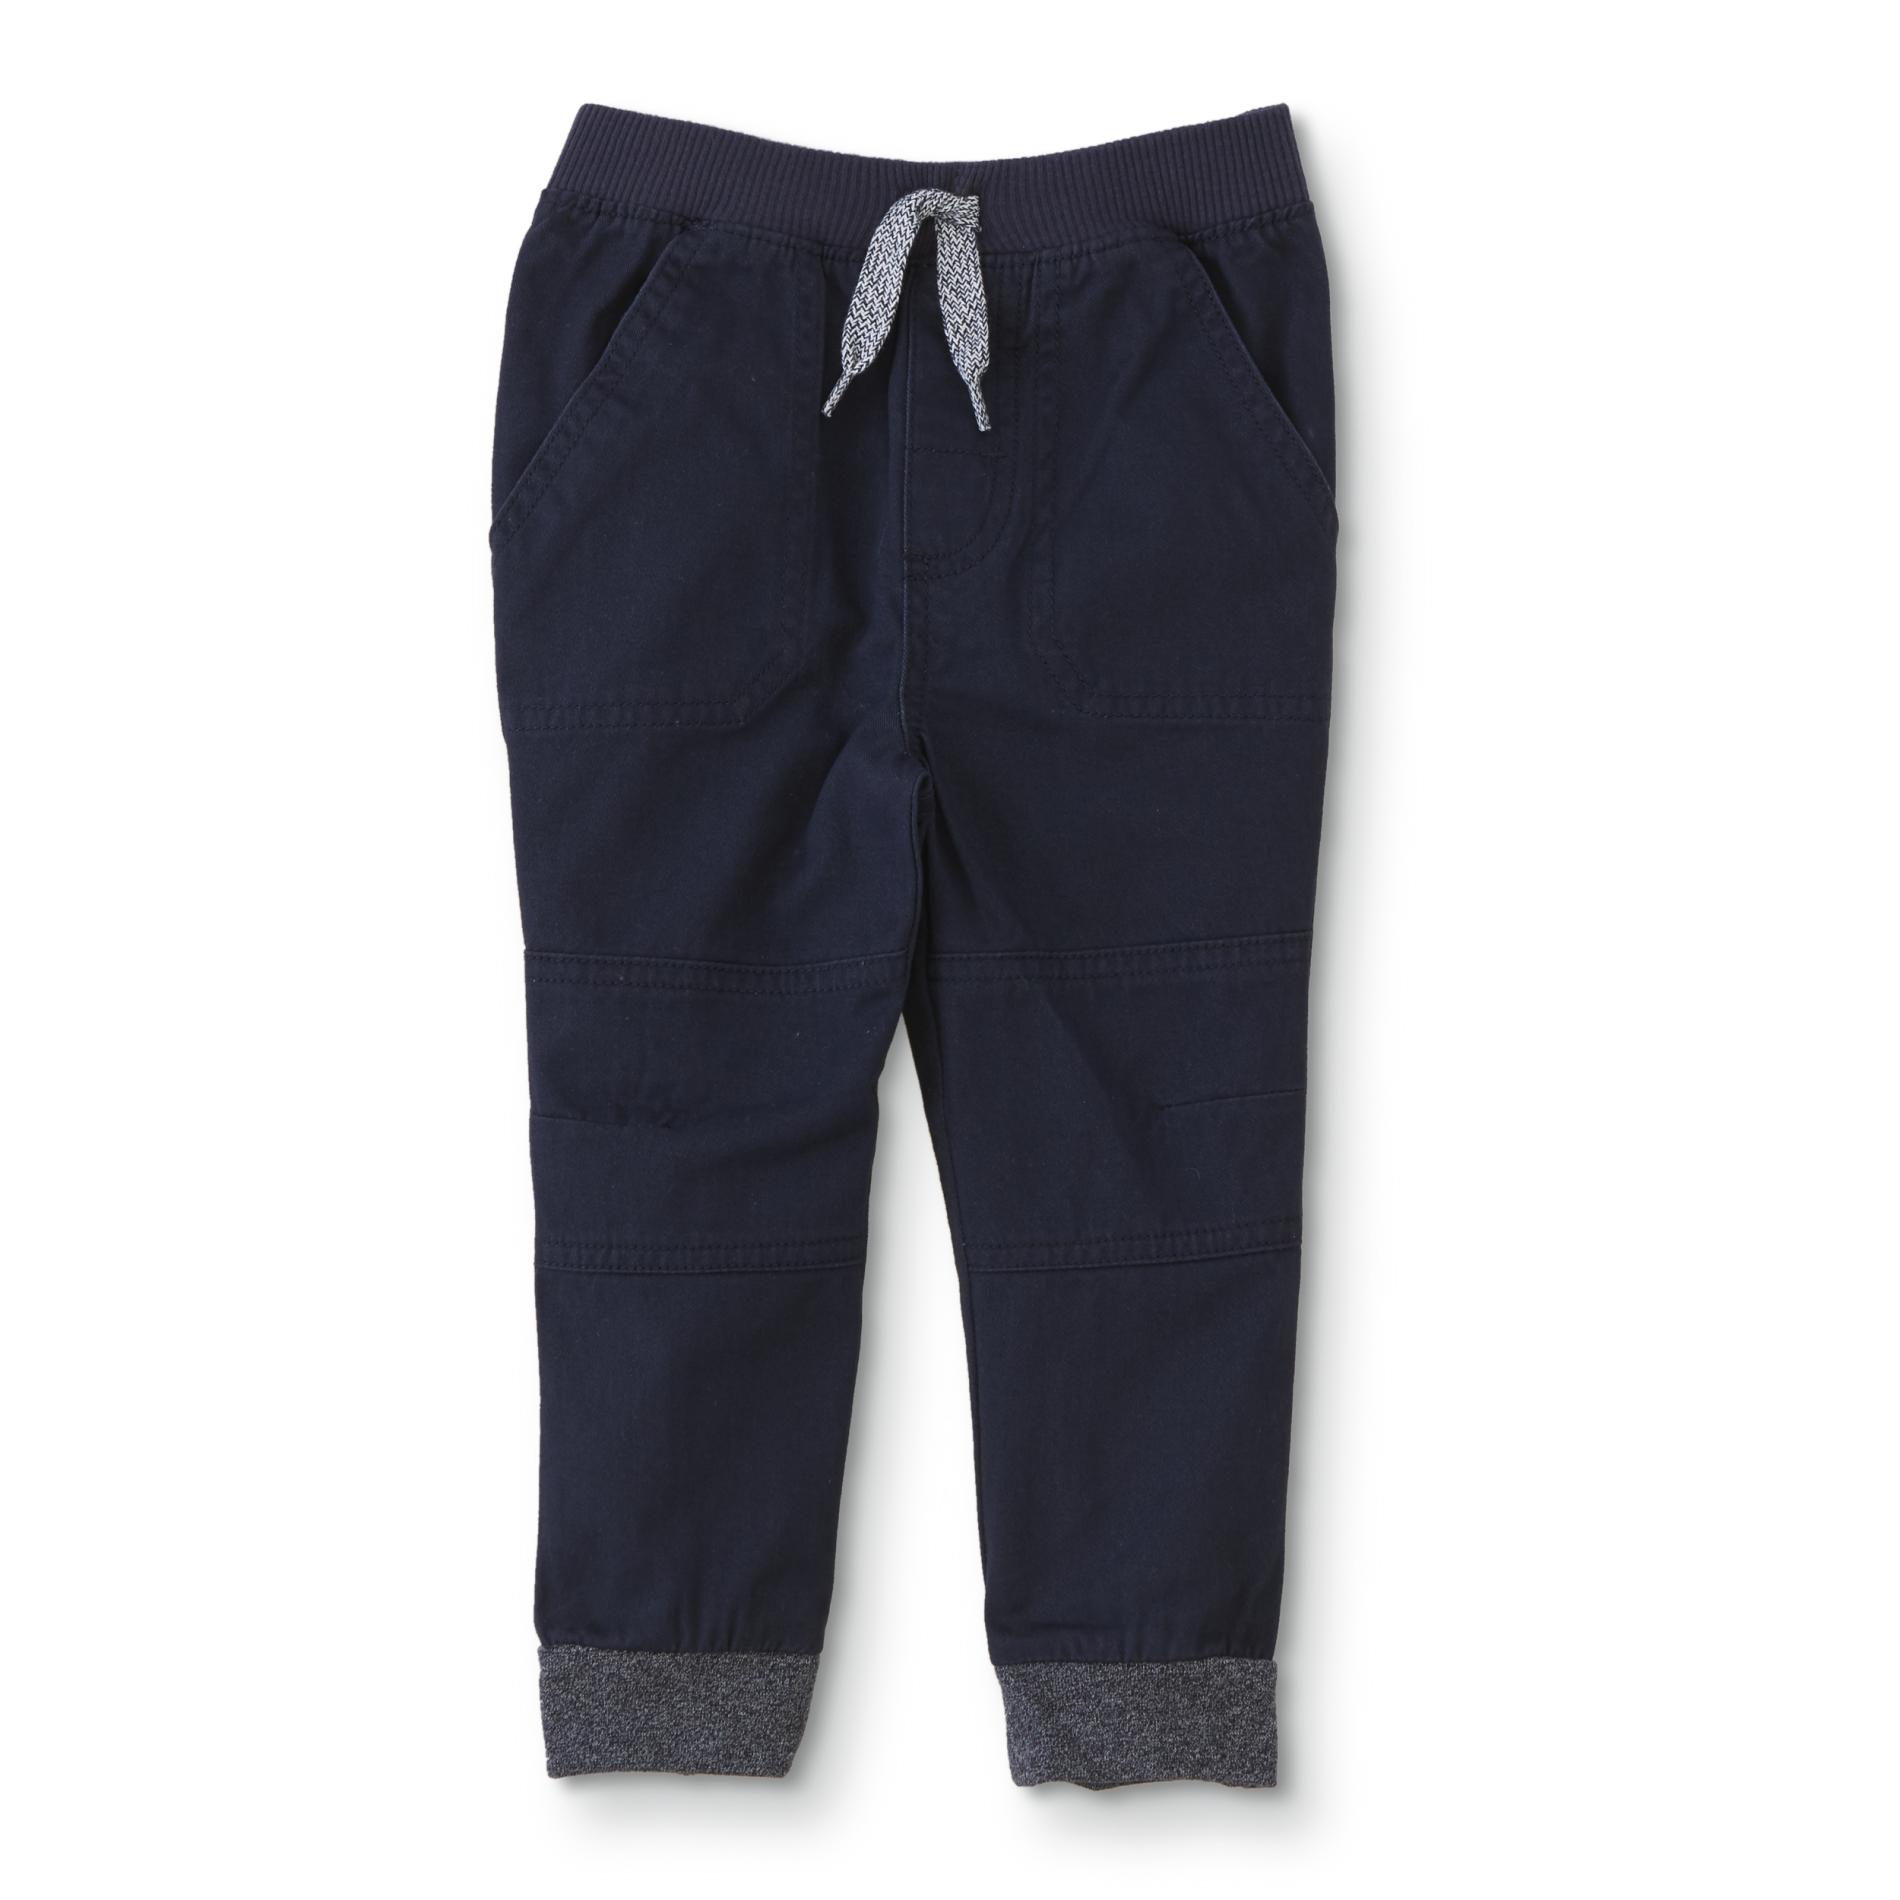 Toughskins Infant & Toddler Boys' Jogger Pants | Shop Your Way: Online ...